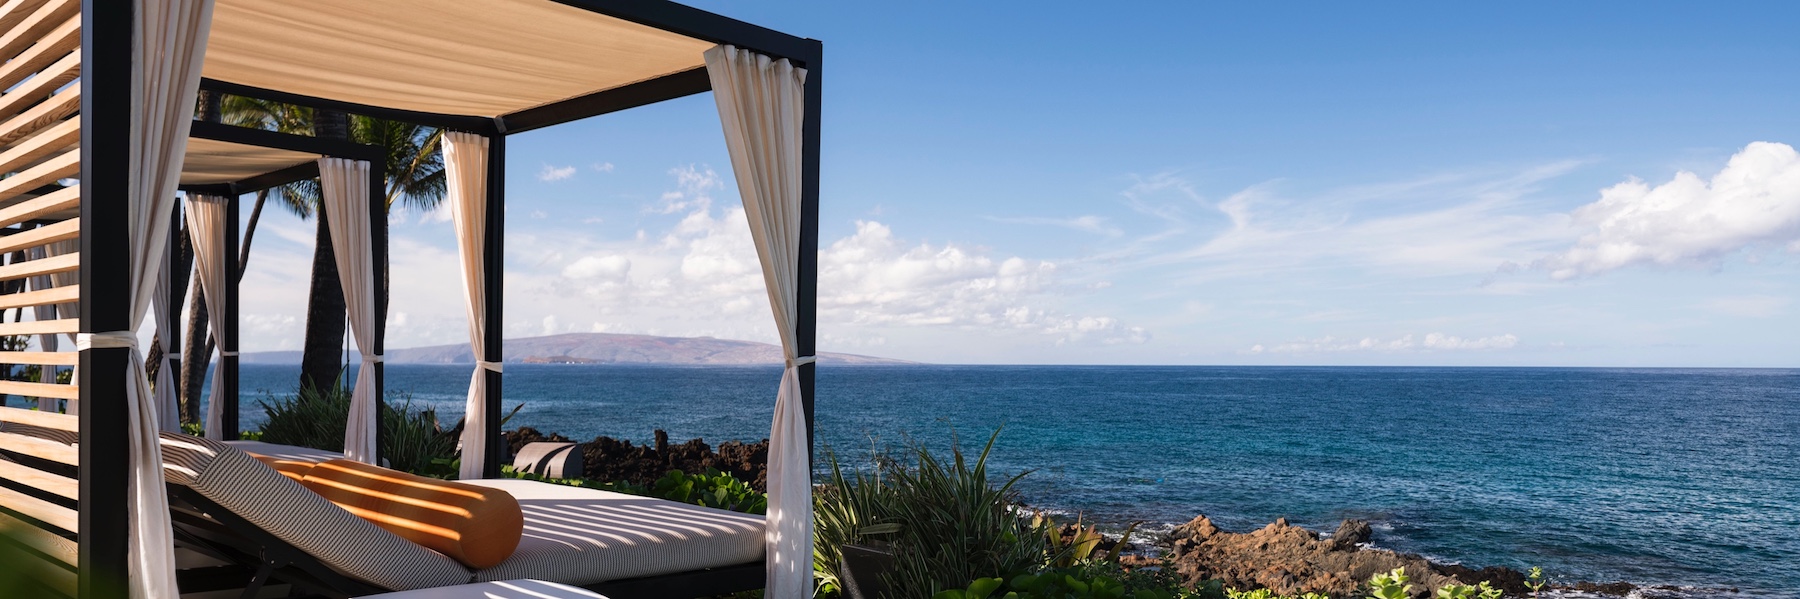 Ocean view from Wailea Beach Resort - Marriott in Maui, Hawaii